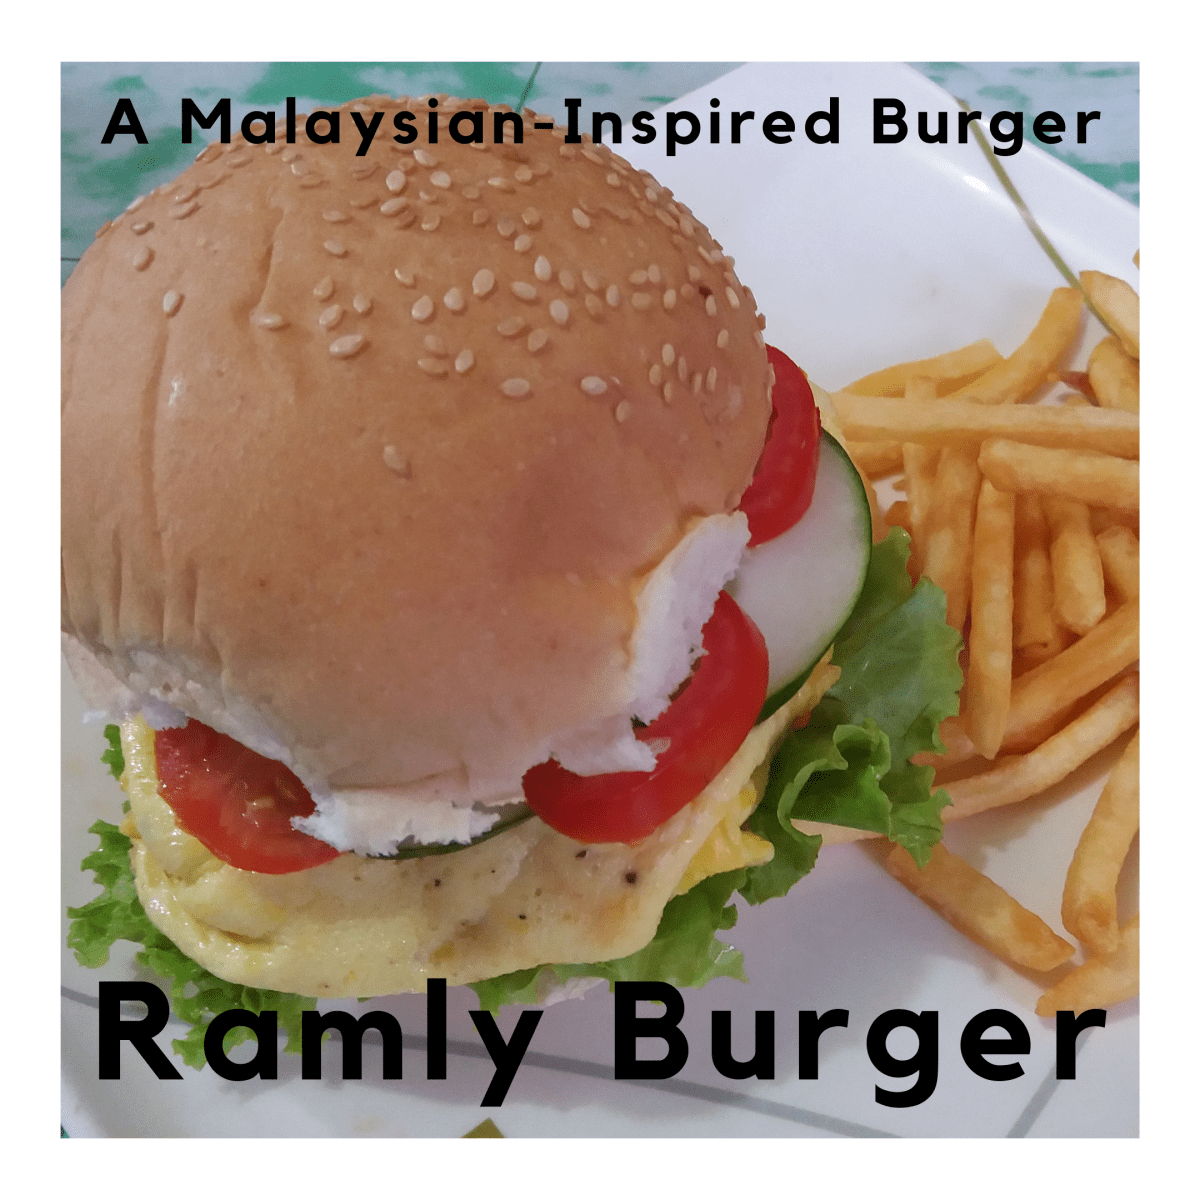 Ramly burger